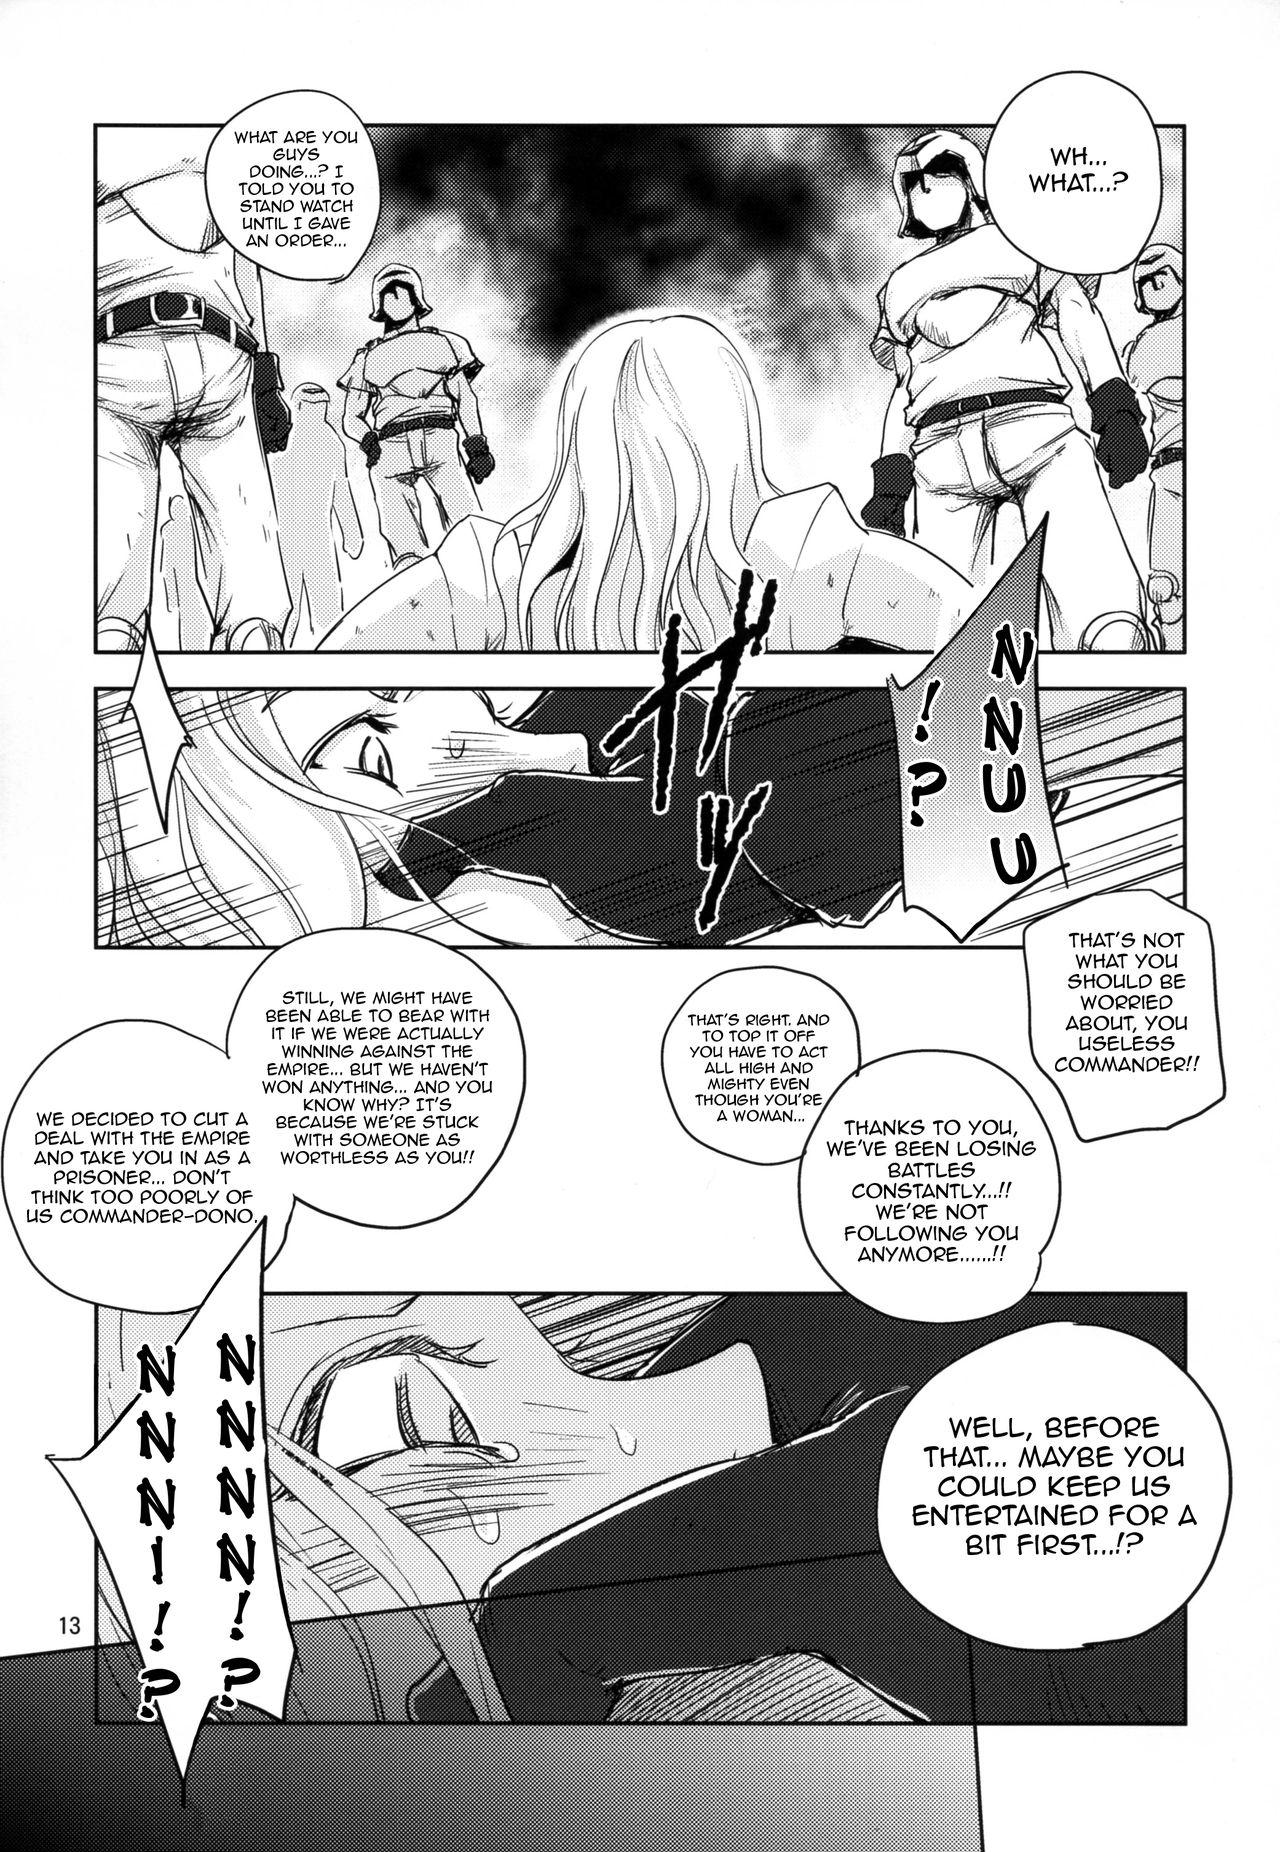 Virtual GRASSEN'S WAR ANOTHER STORY Ex #04 Node Shinkou IV - Original Dutch - Page 13